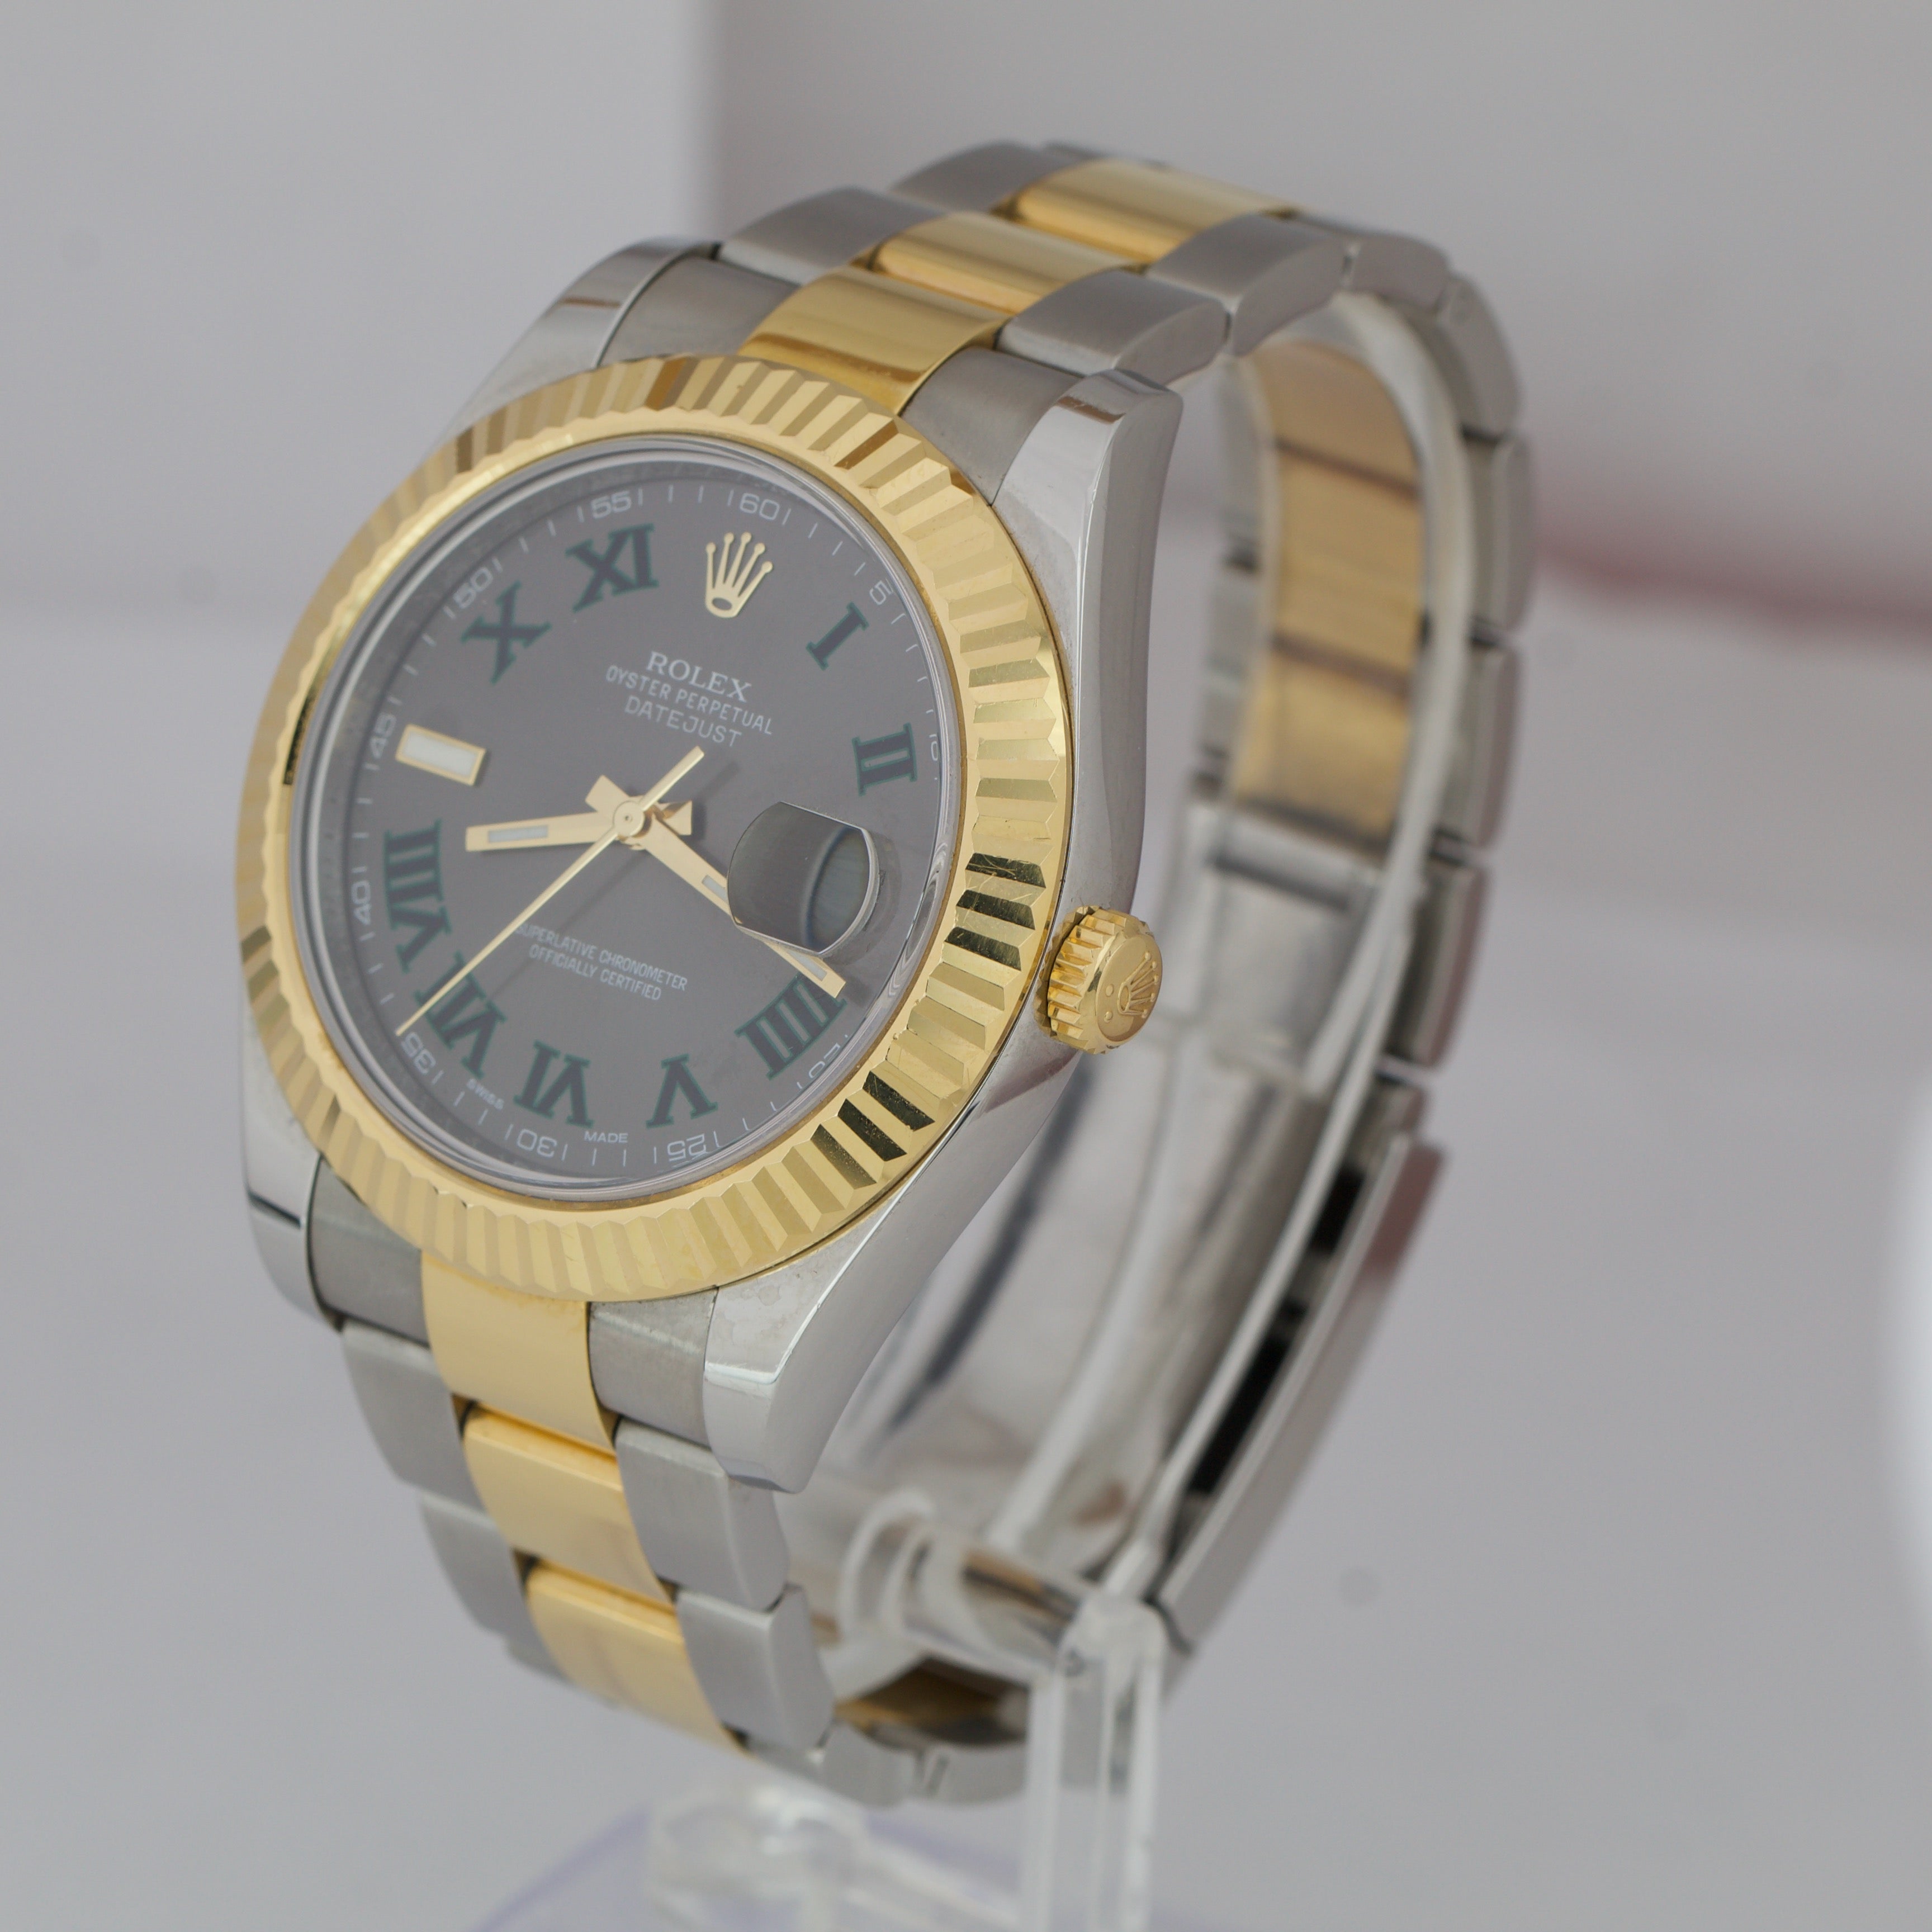 2013 UNPOLISHED Rolex Datejust II 2 WIMBLEDON 18K TwoTone Gold 41mm Watch 116333